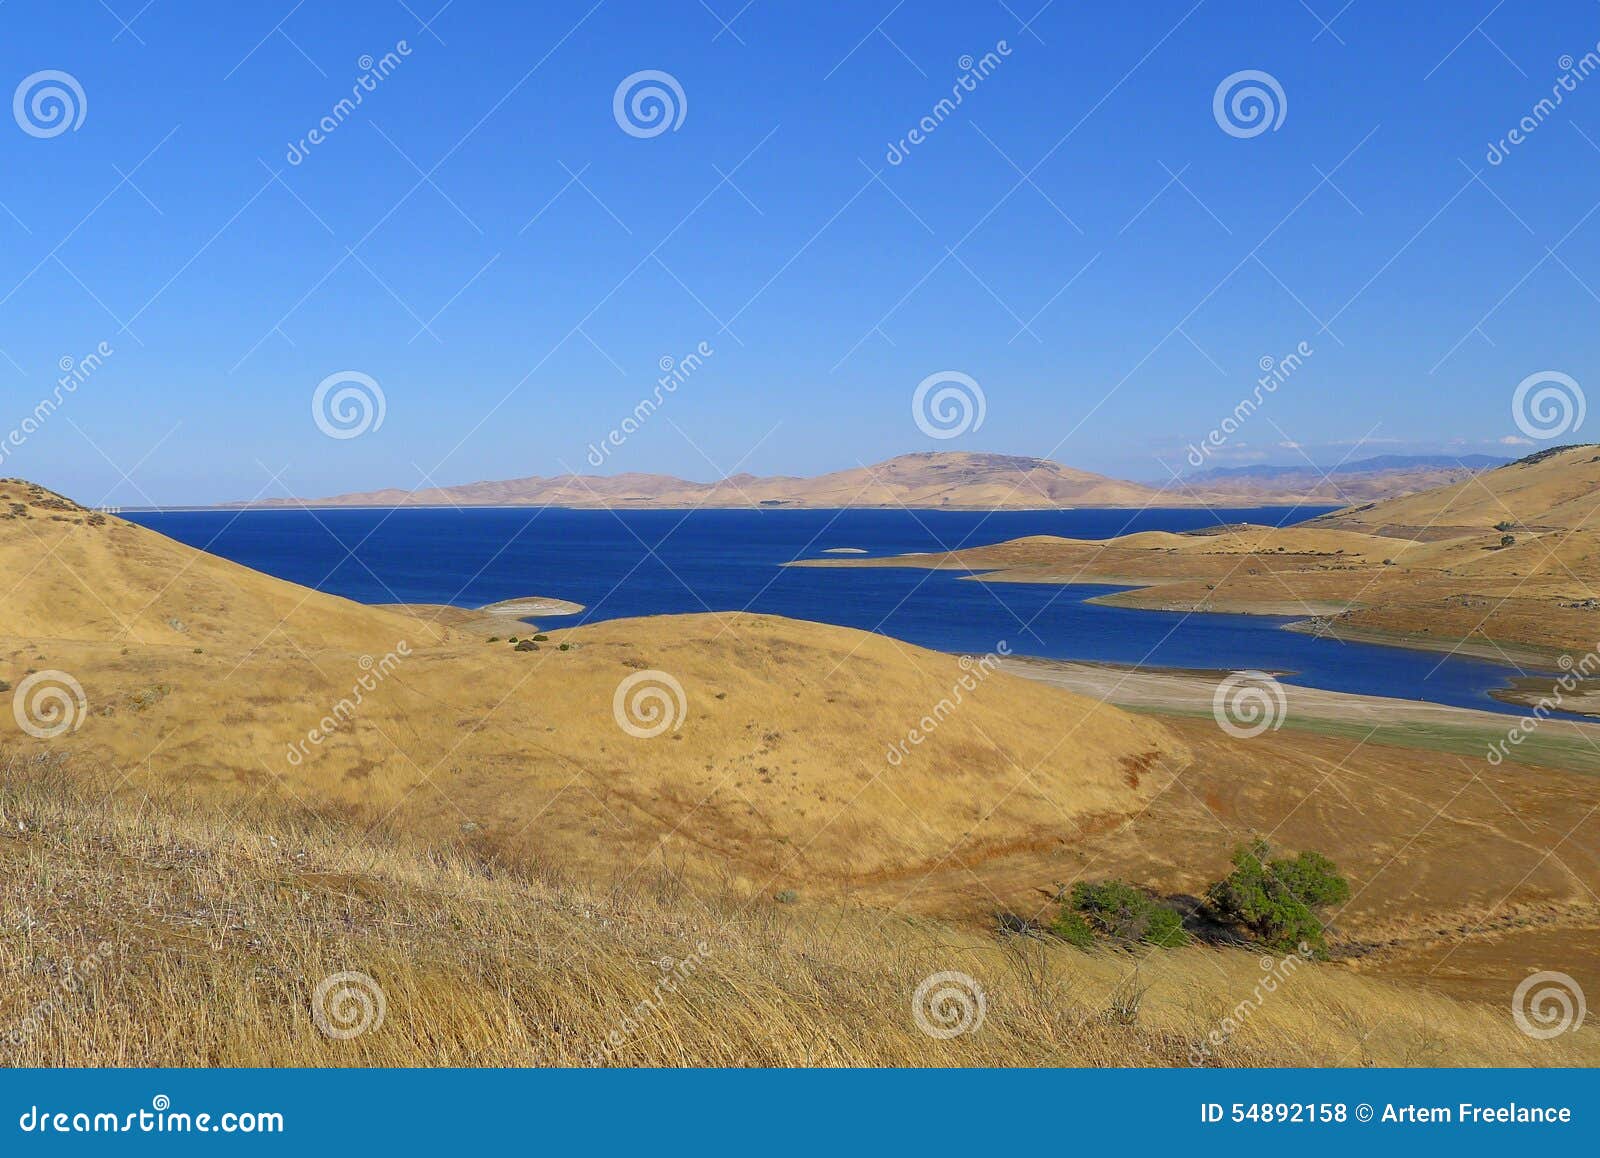 the san luis reservoir